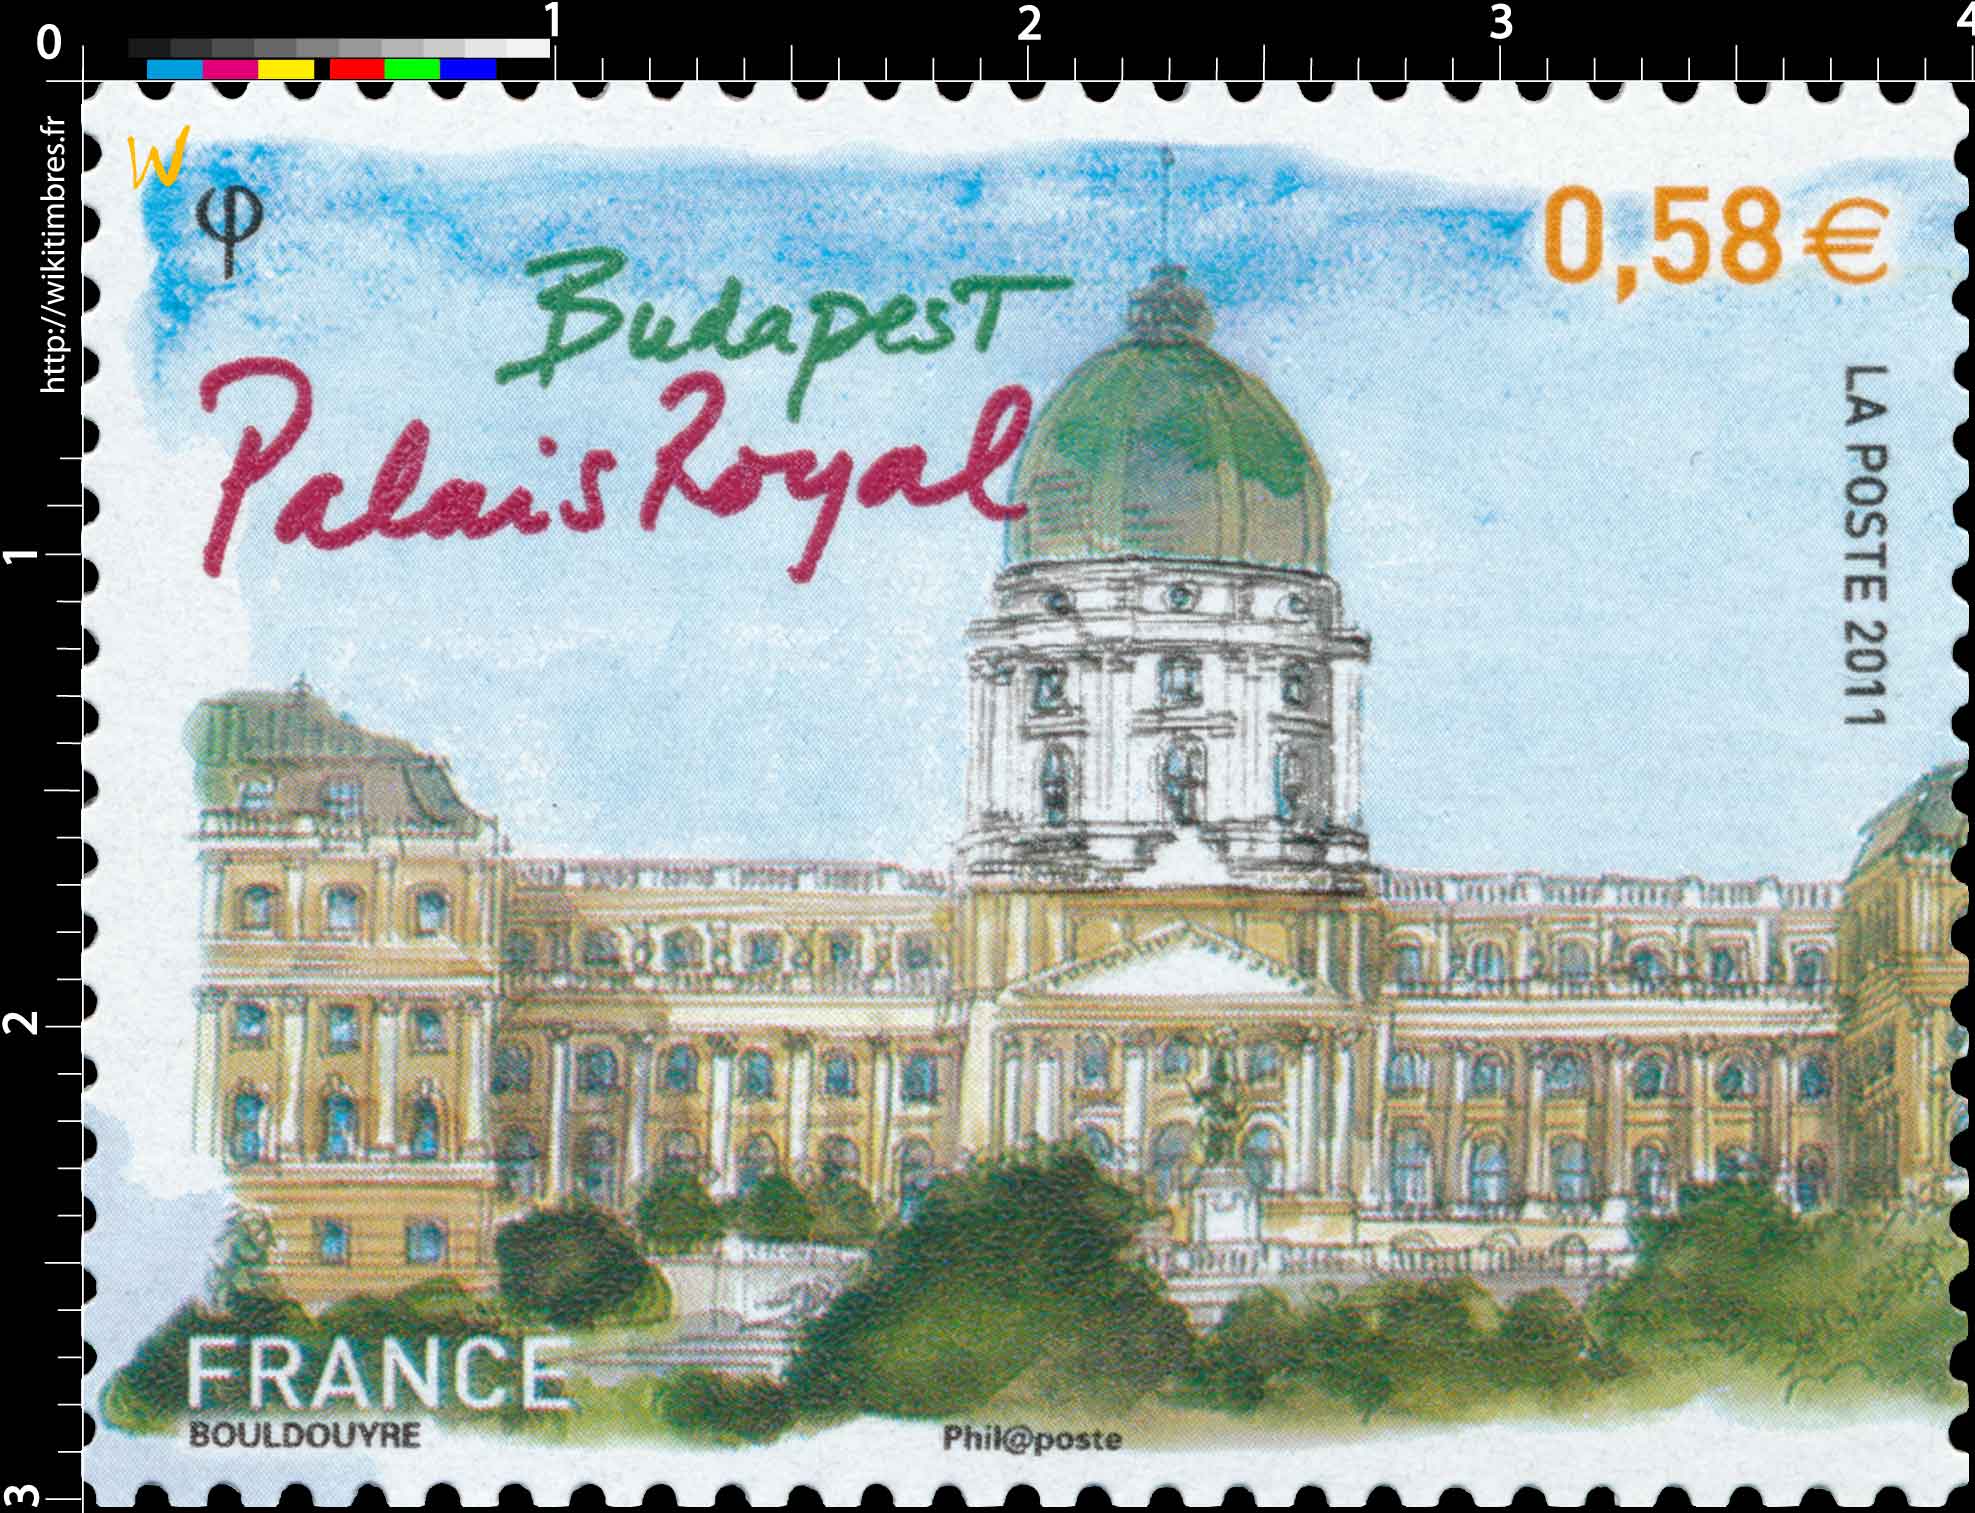 Budapest Palais Royal